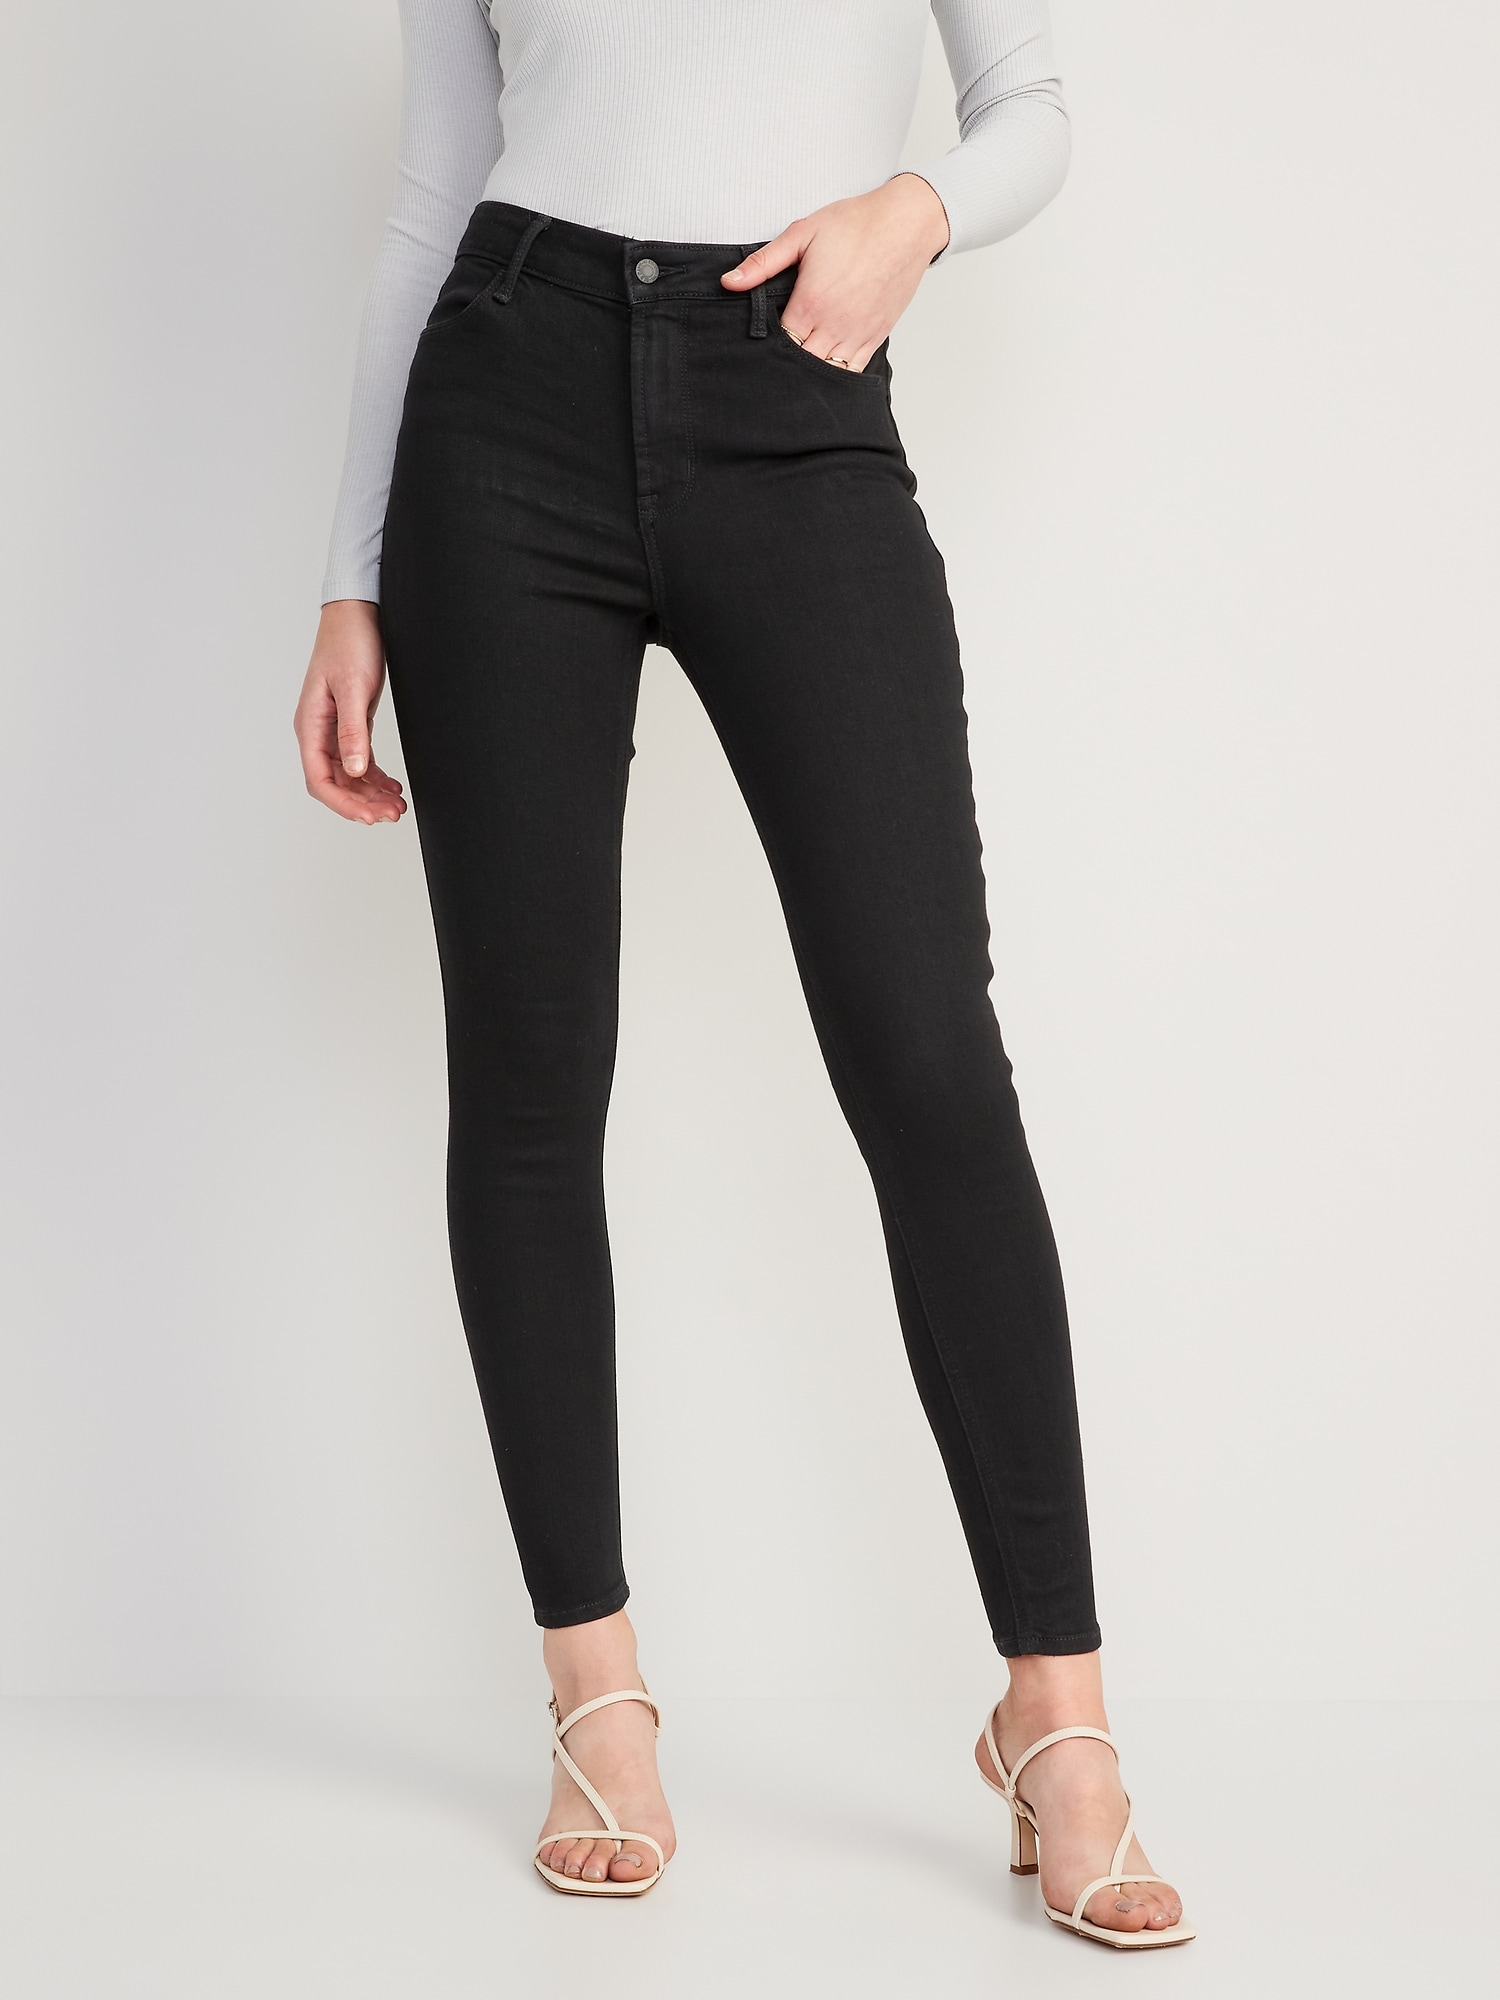 Womens Black Trouser Pants : Target-baongoctrading.com.vn